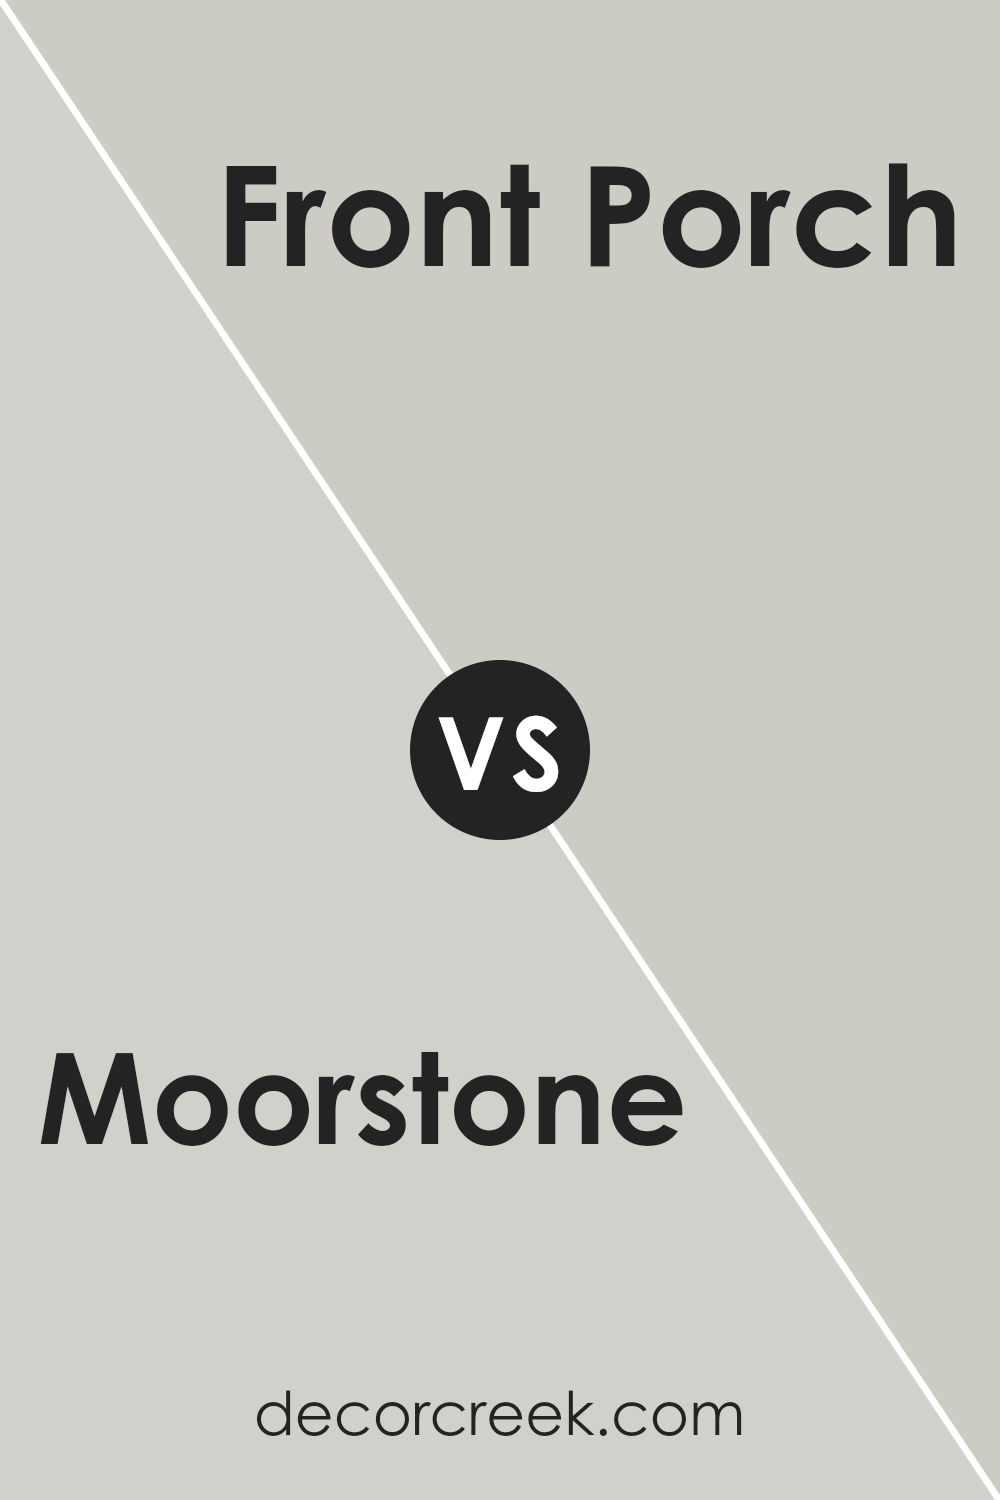 moorstone_sw_9630_vs_front_porch_sw_7651